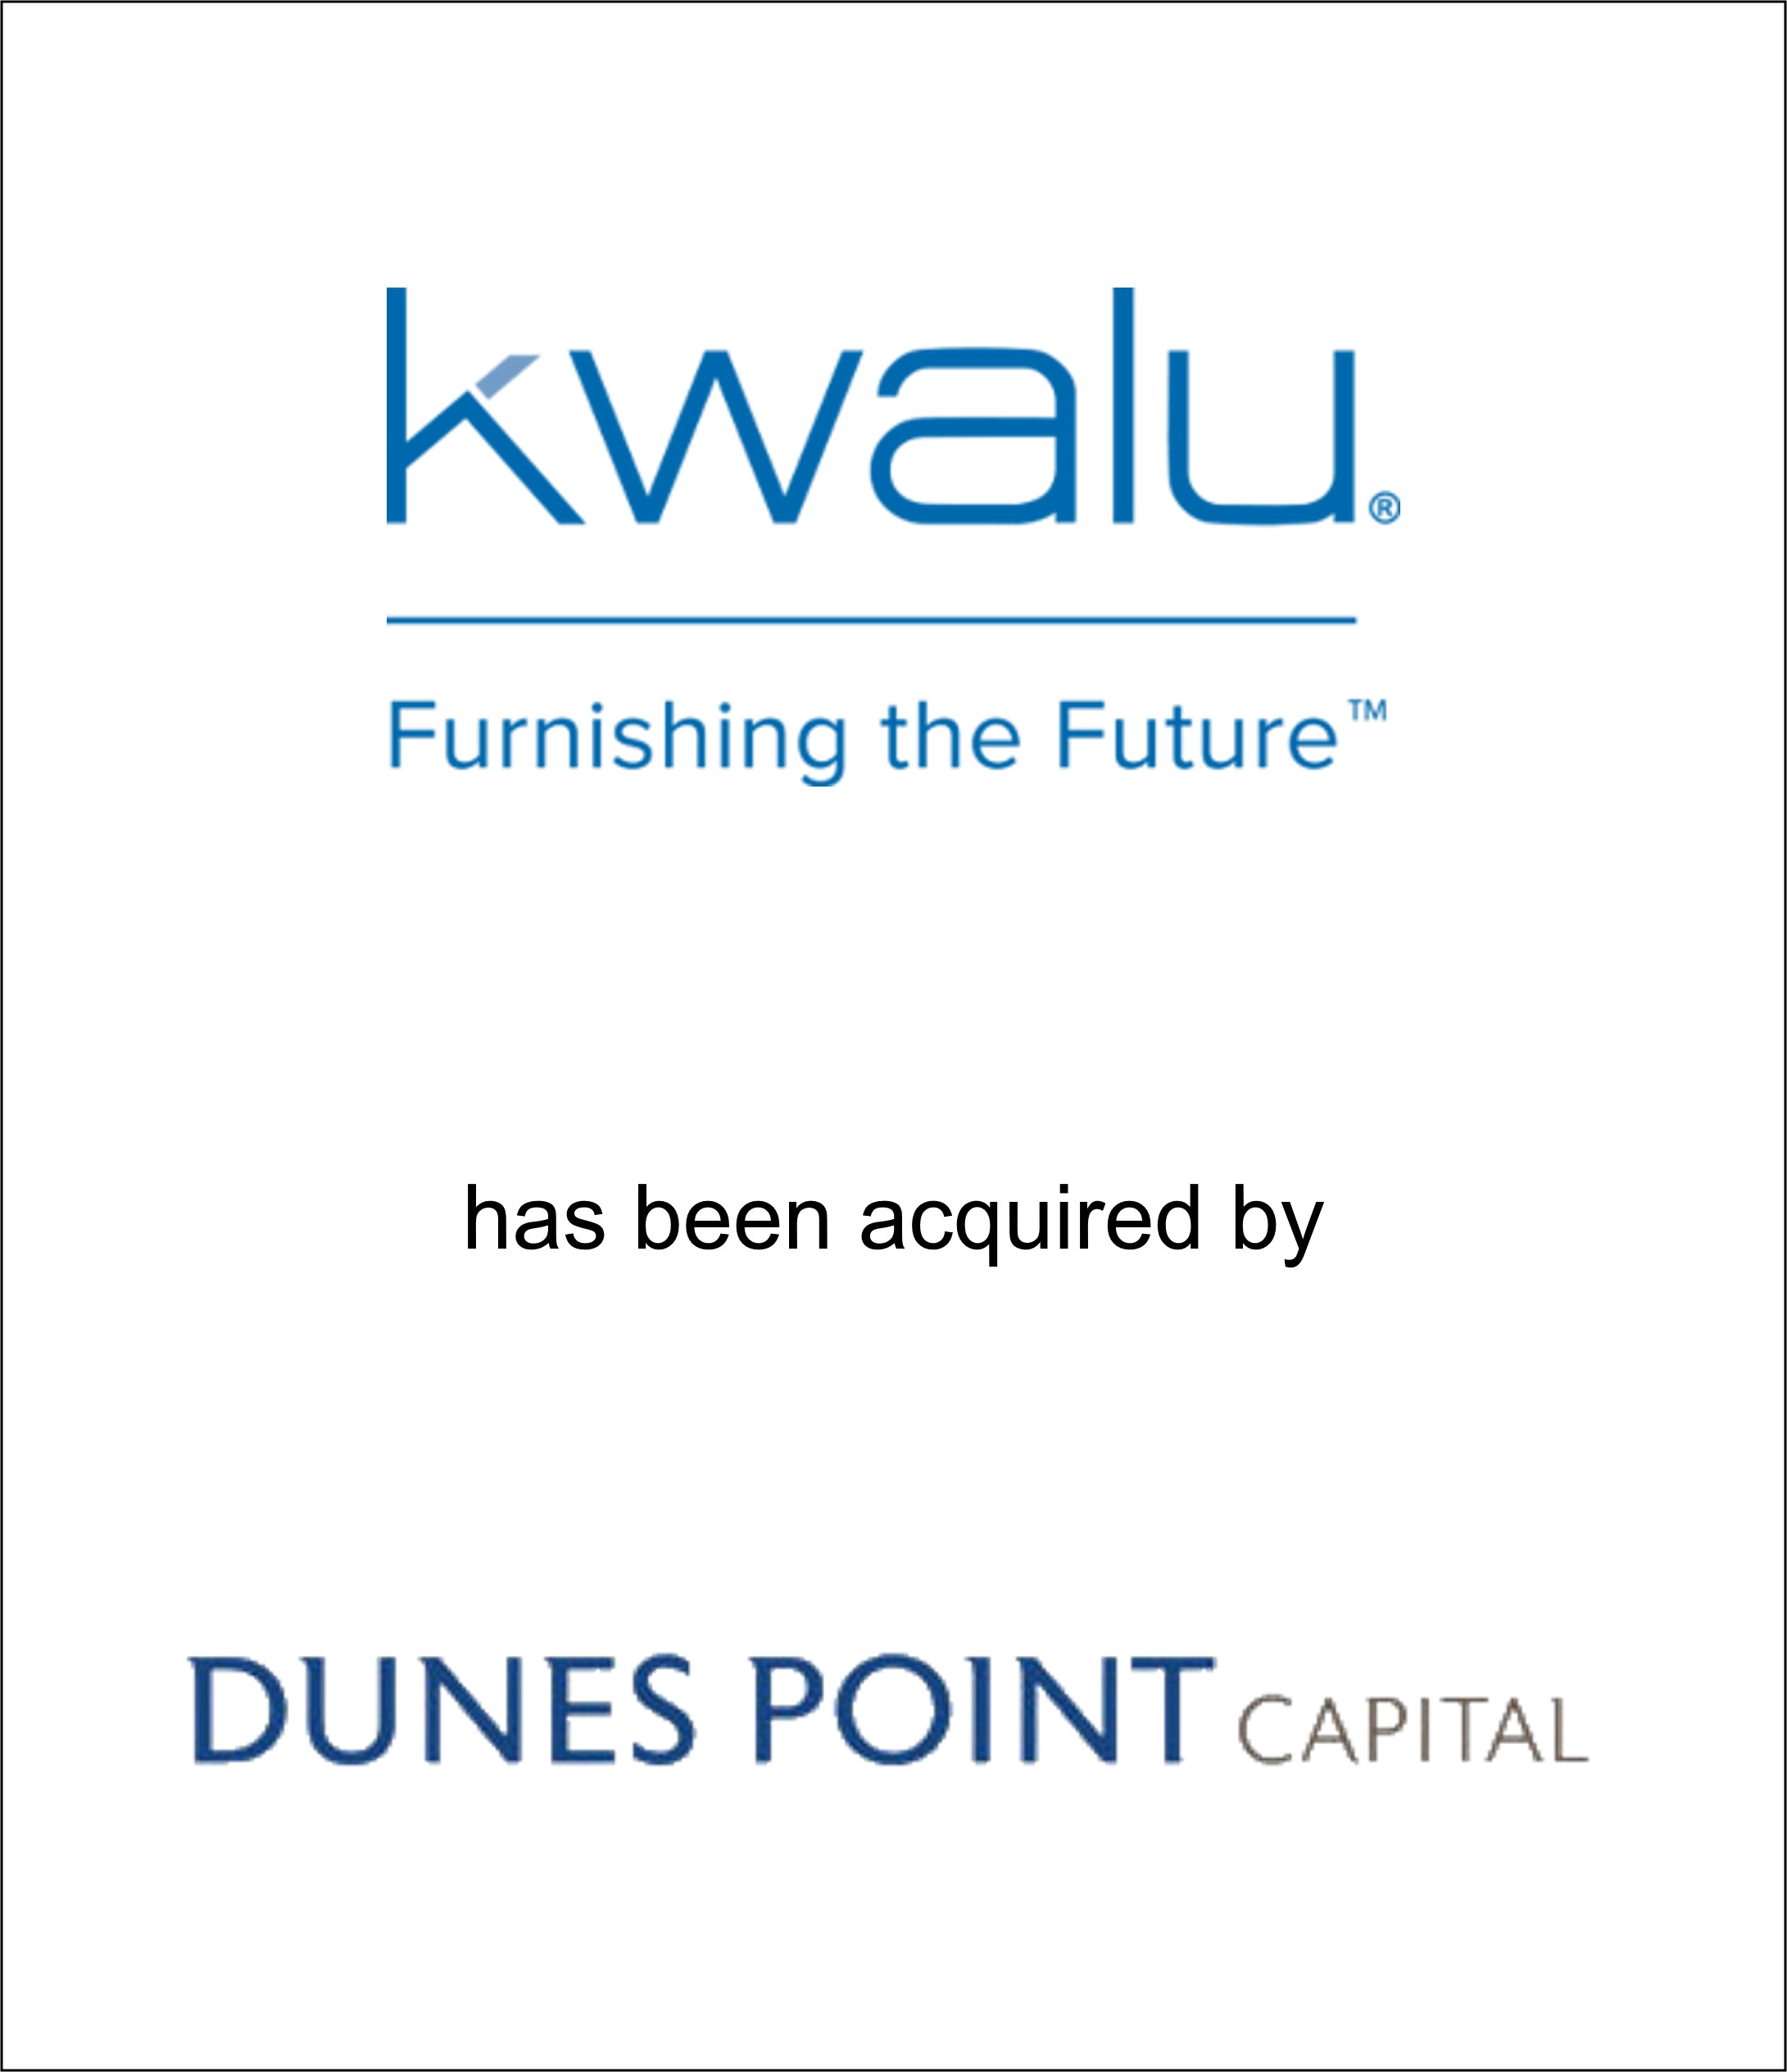 Genesis Capital Advises Family-Owned Kwalu on Sale to Dunes Point Capital